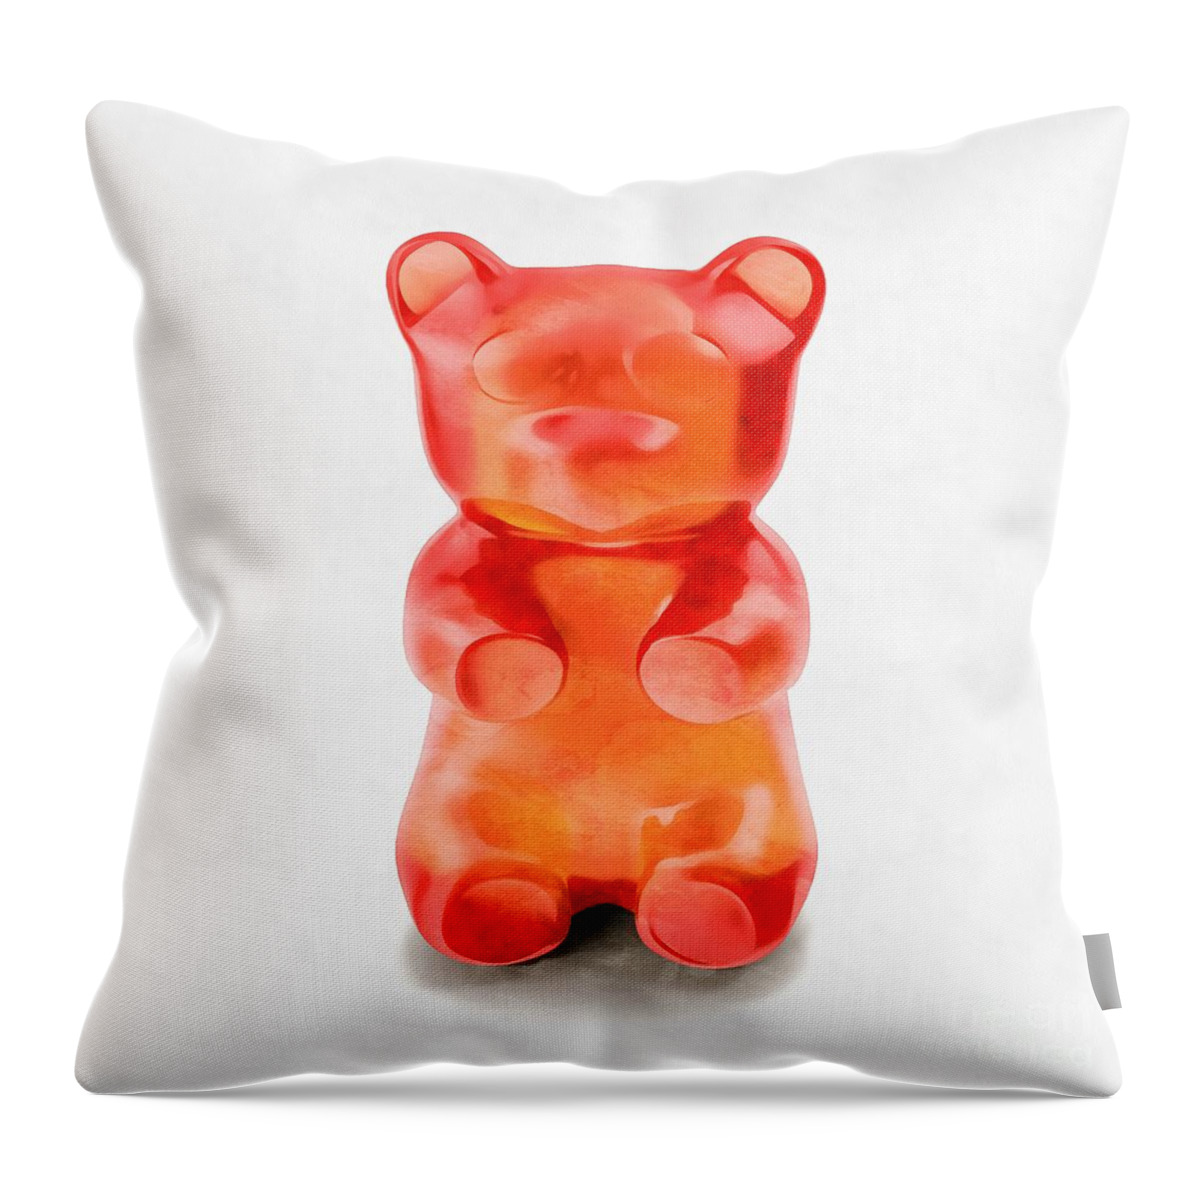 Candy Throw Pillow featuring the digital art Gummy Bear Red Orange by Edward Fielding